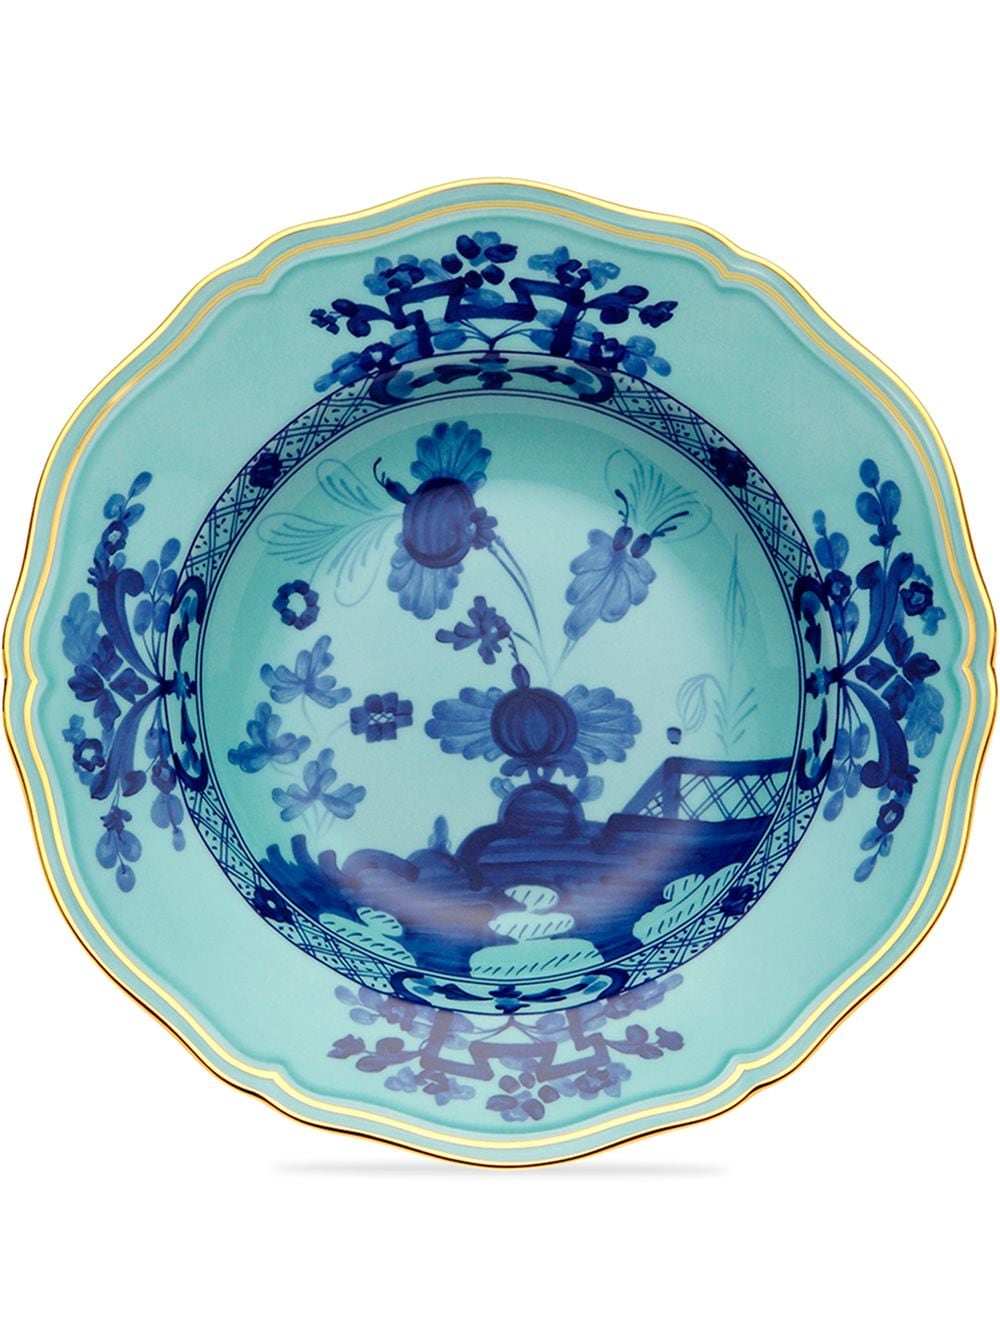 GINORI 1735 Oriente Italiano set of 2 soup plates - Blue von GINORI 1735